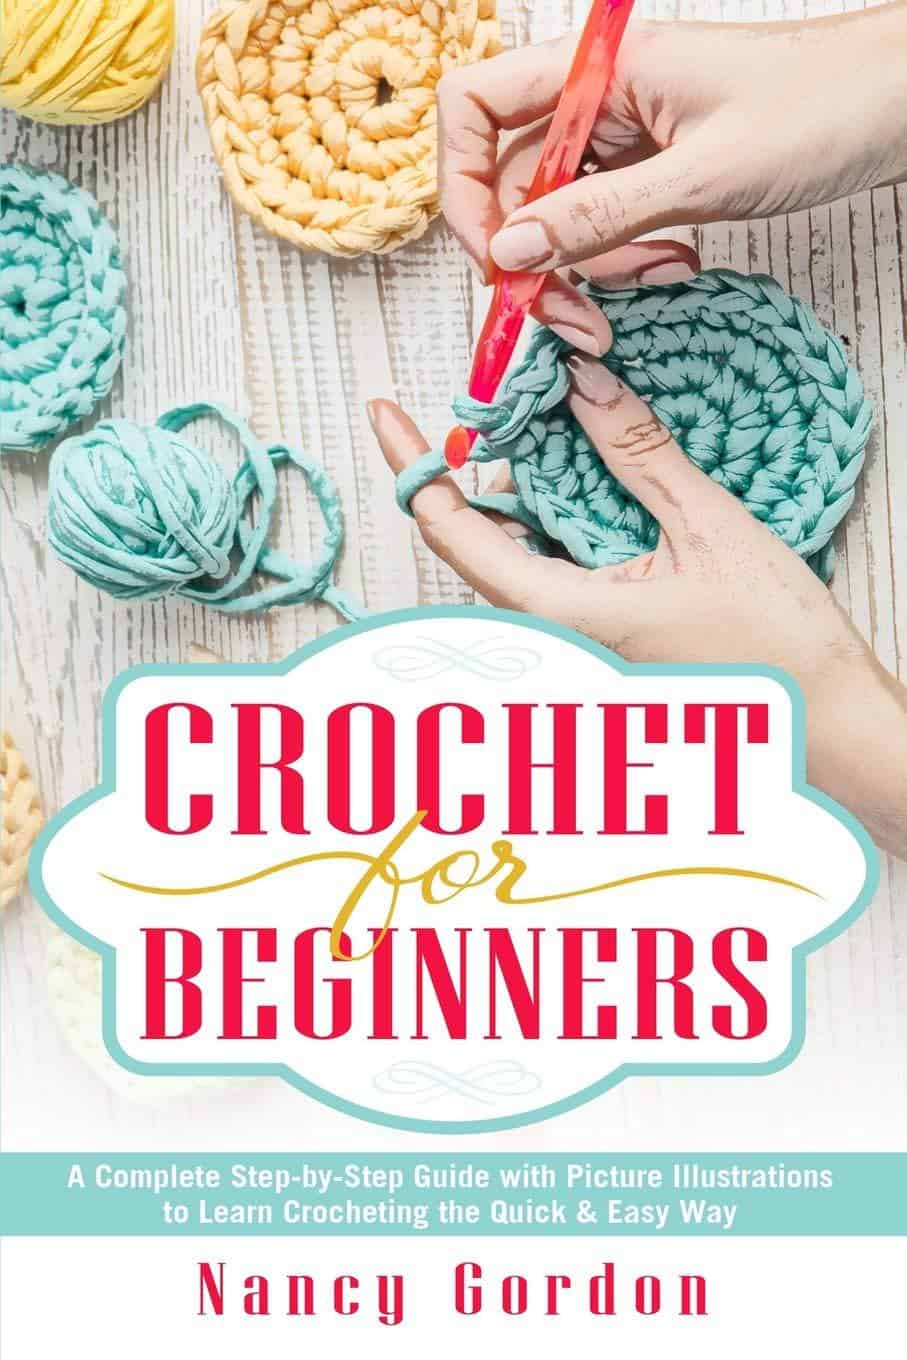 More Christmas Ornaments To Crochet - By Megan Kreiner (paperback) : Target